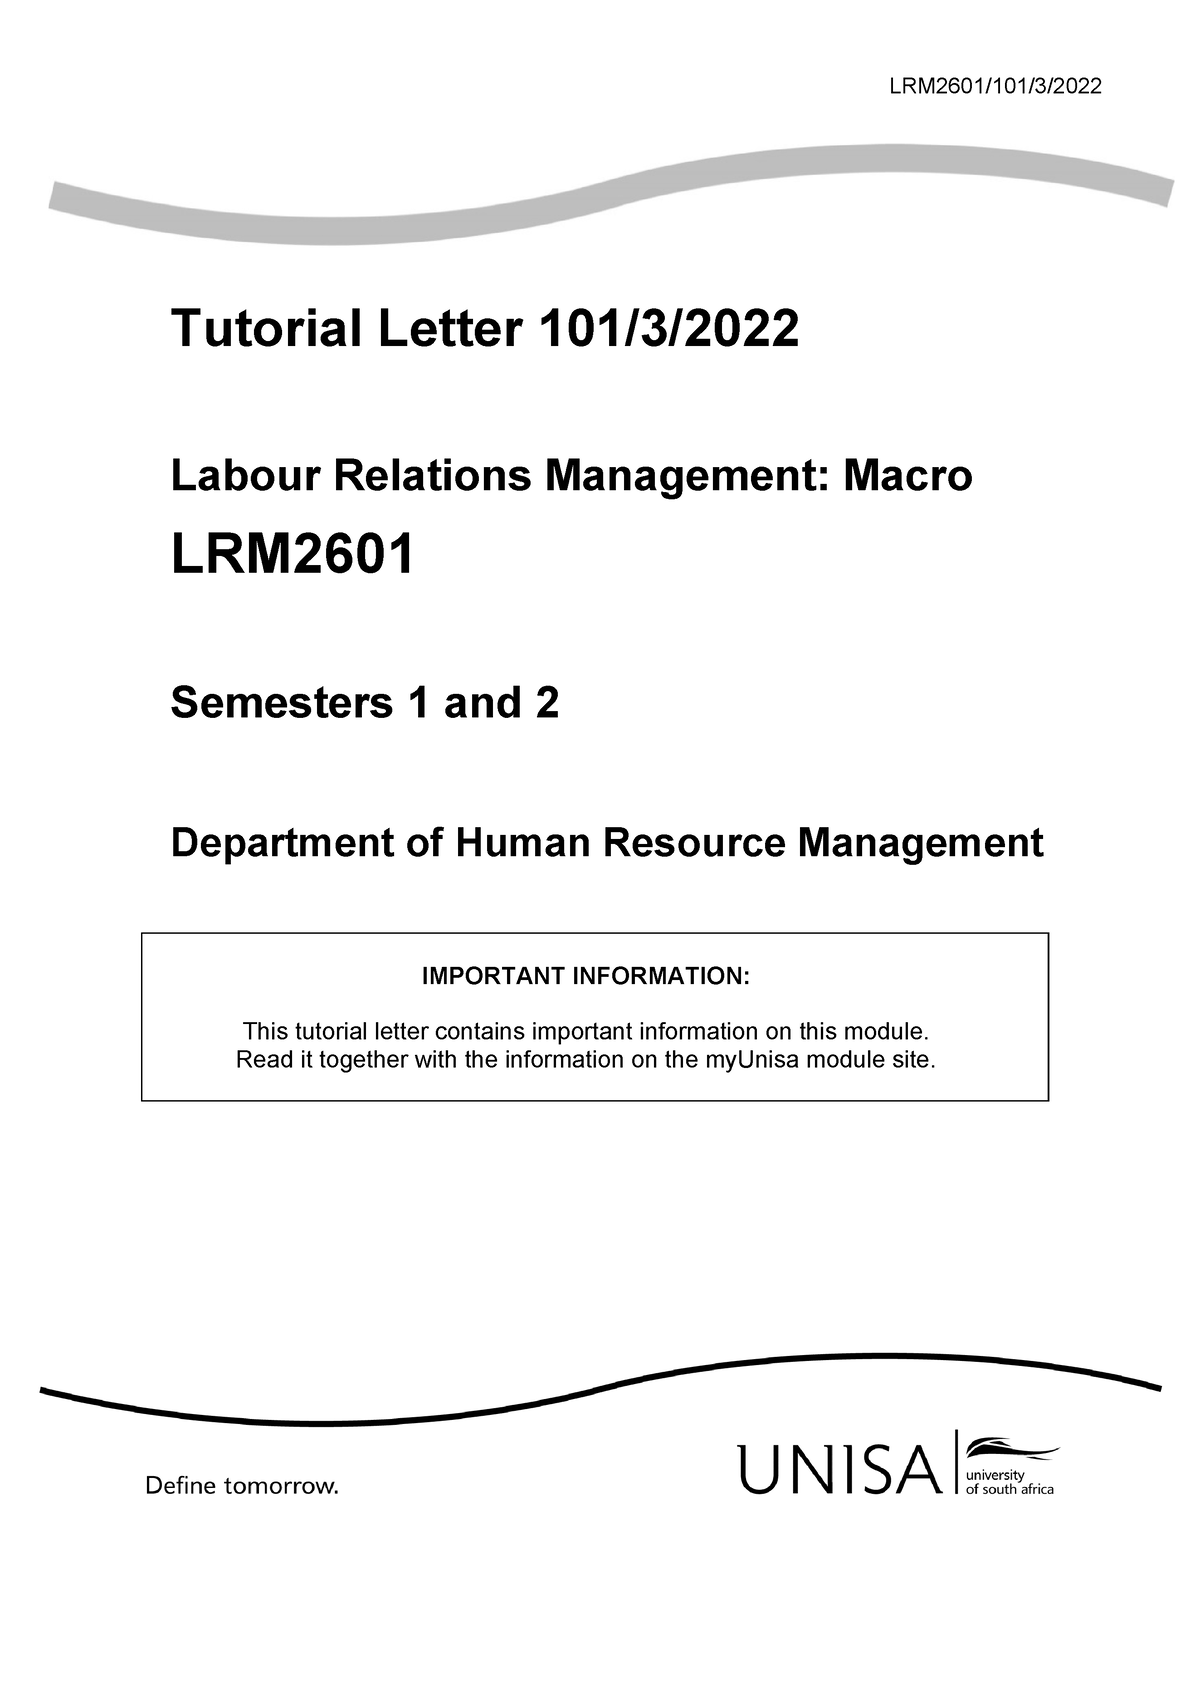 assignment 2 lrm2601